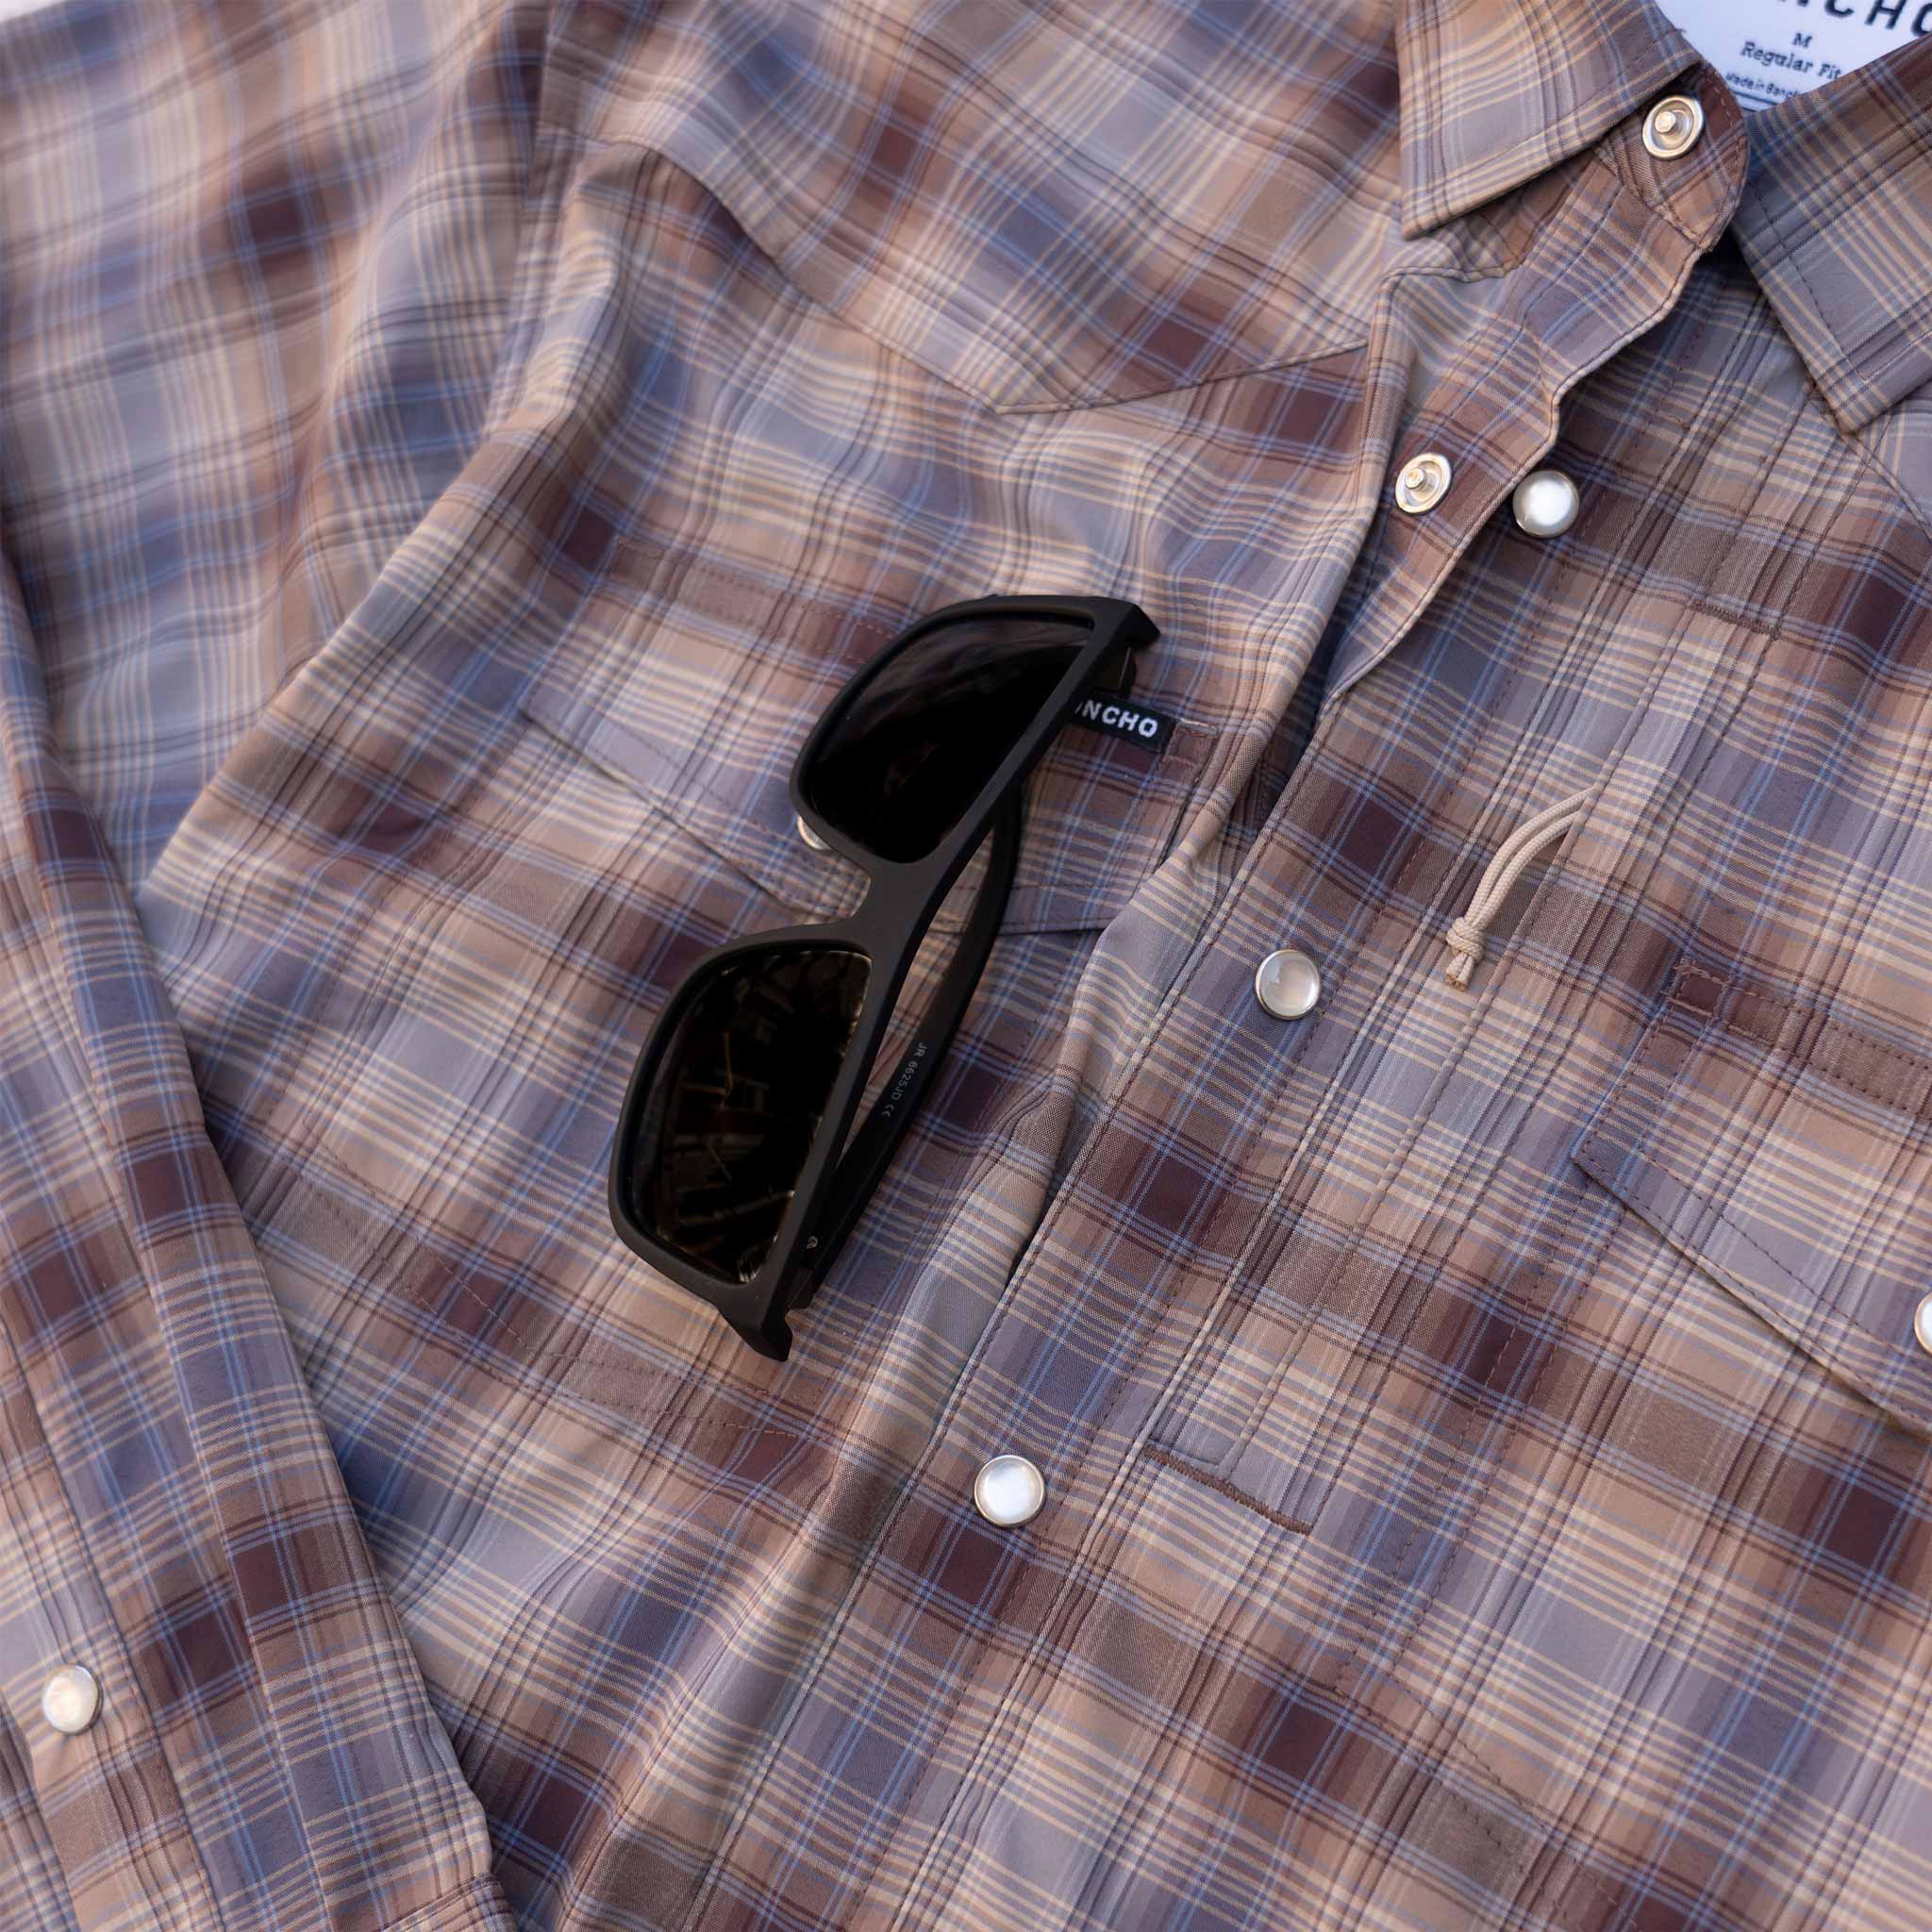 close up of sunglasses on shirt